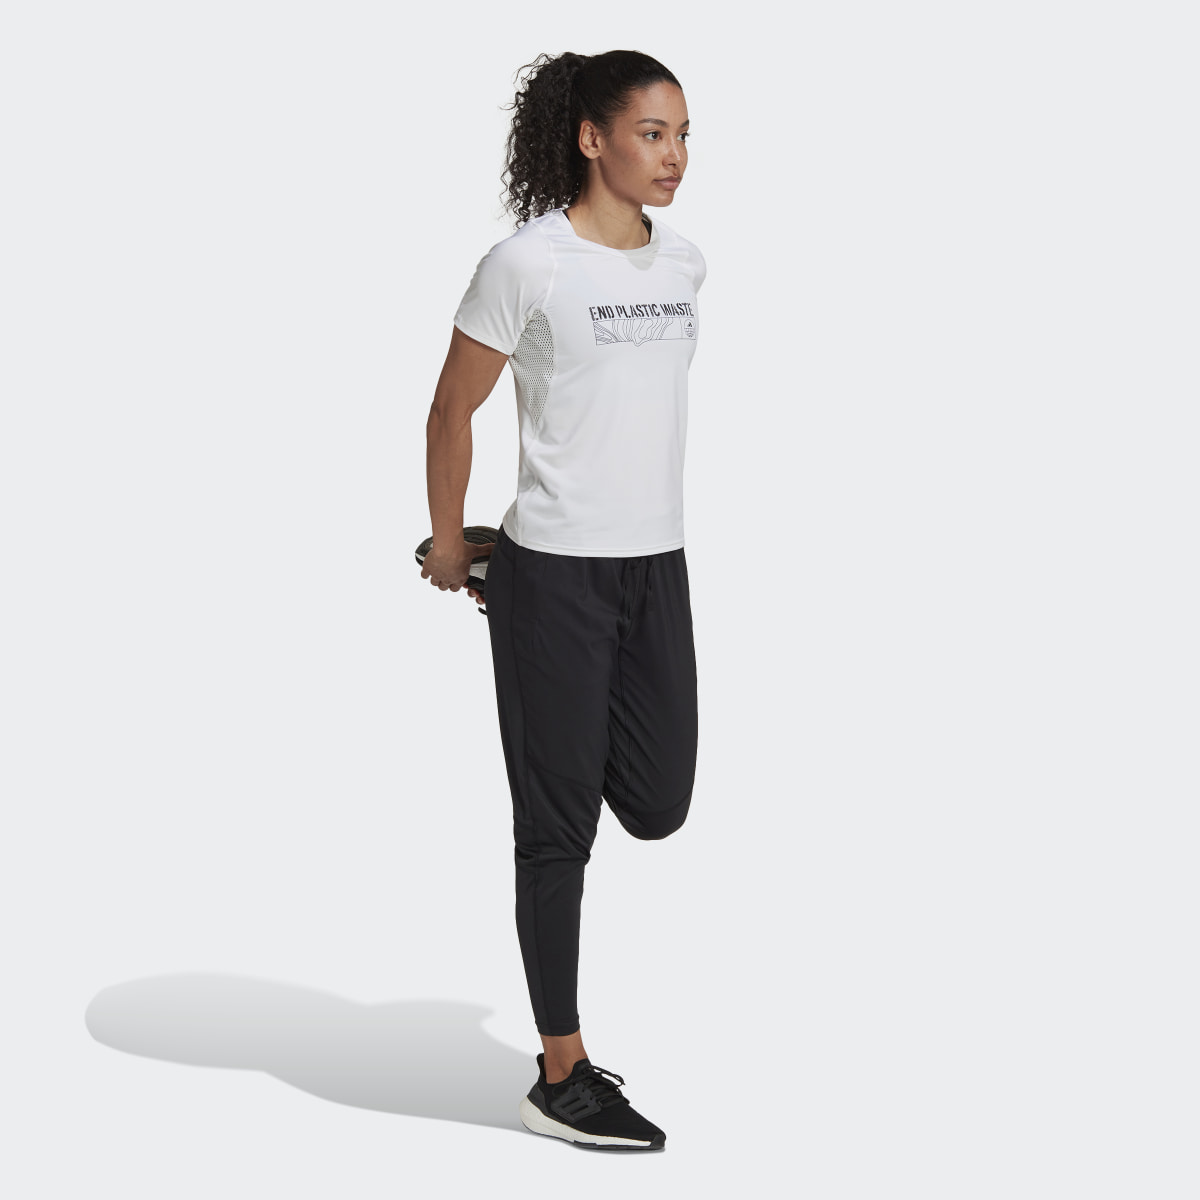 Adidas Fast Running Pants - HC6340